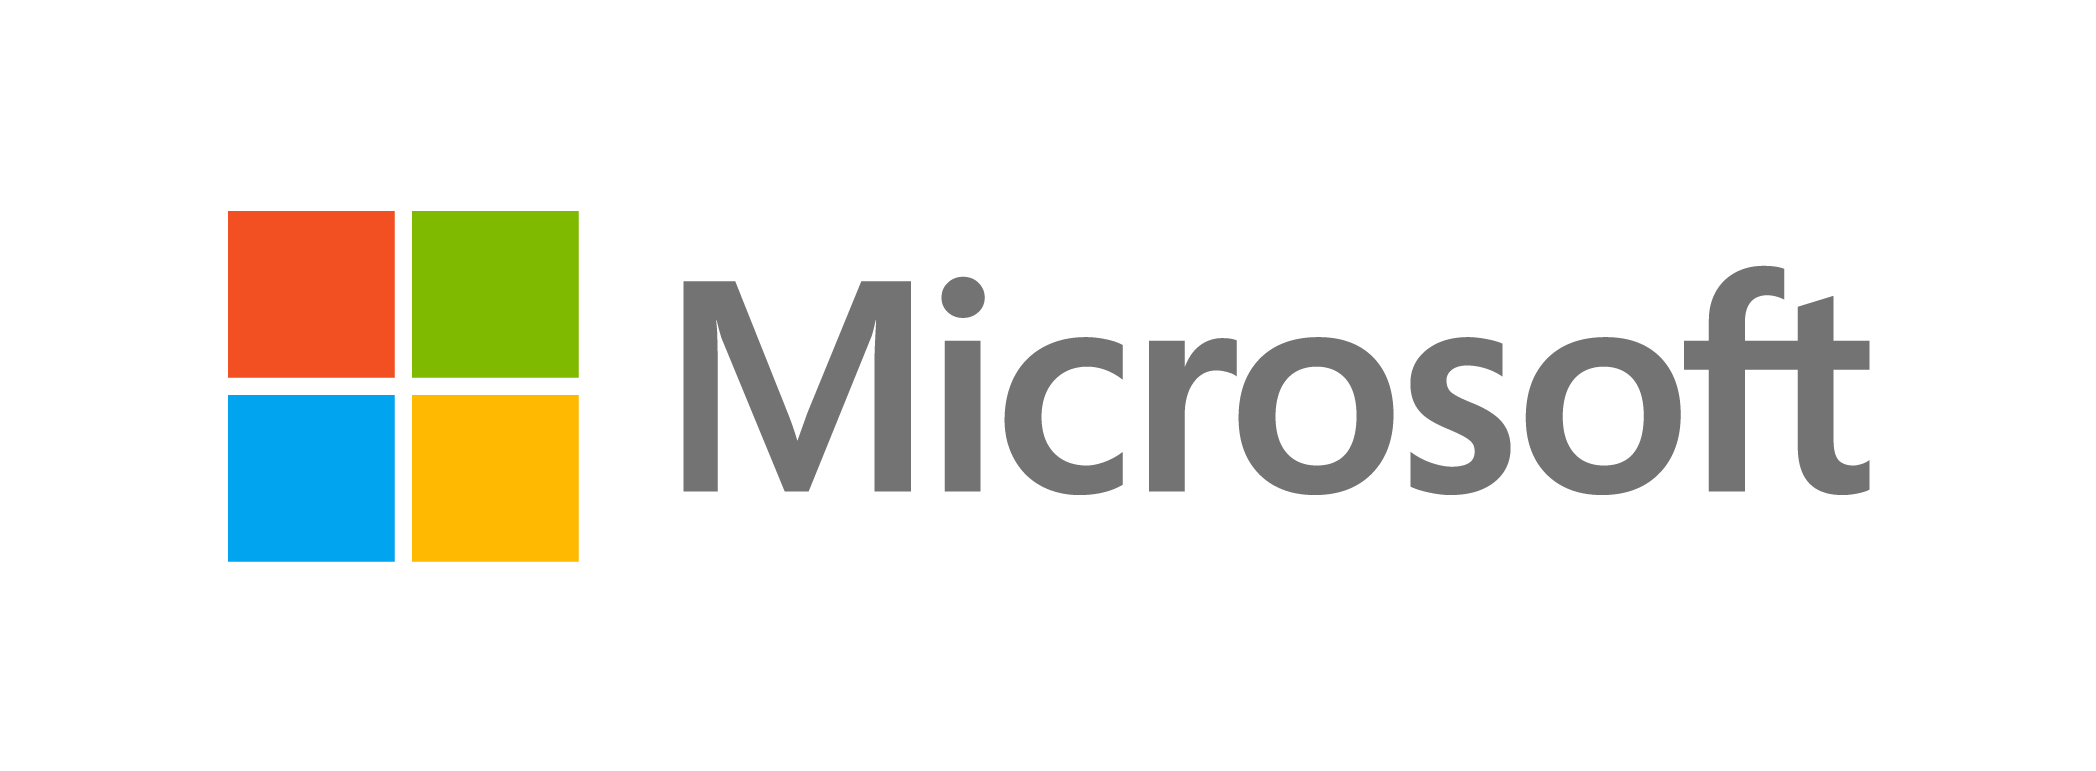 Microsoft logo Transparent Background